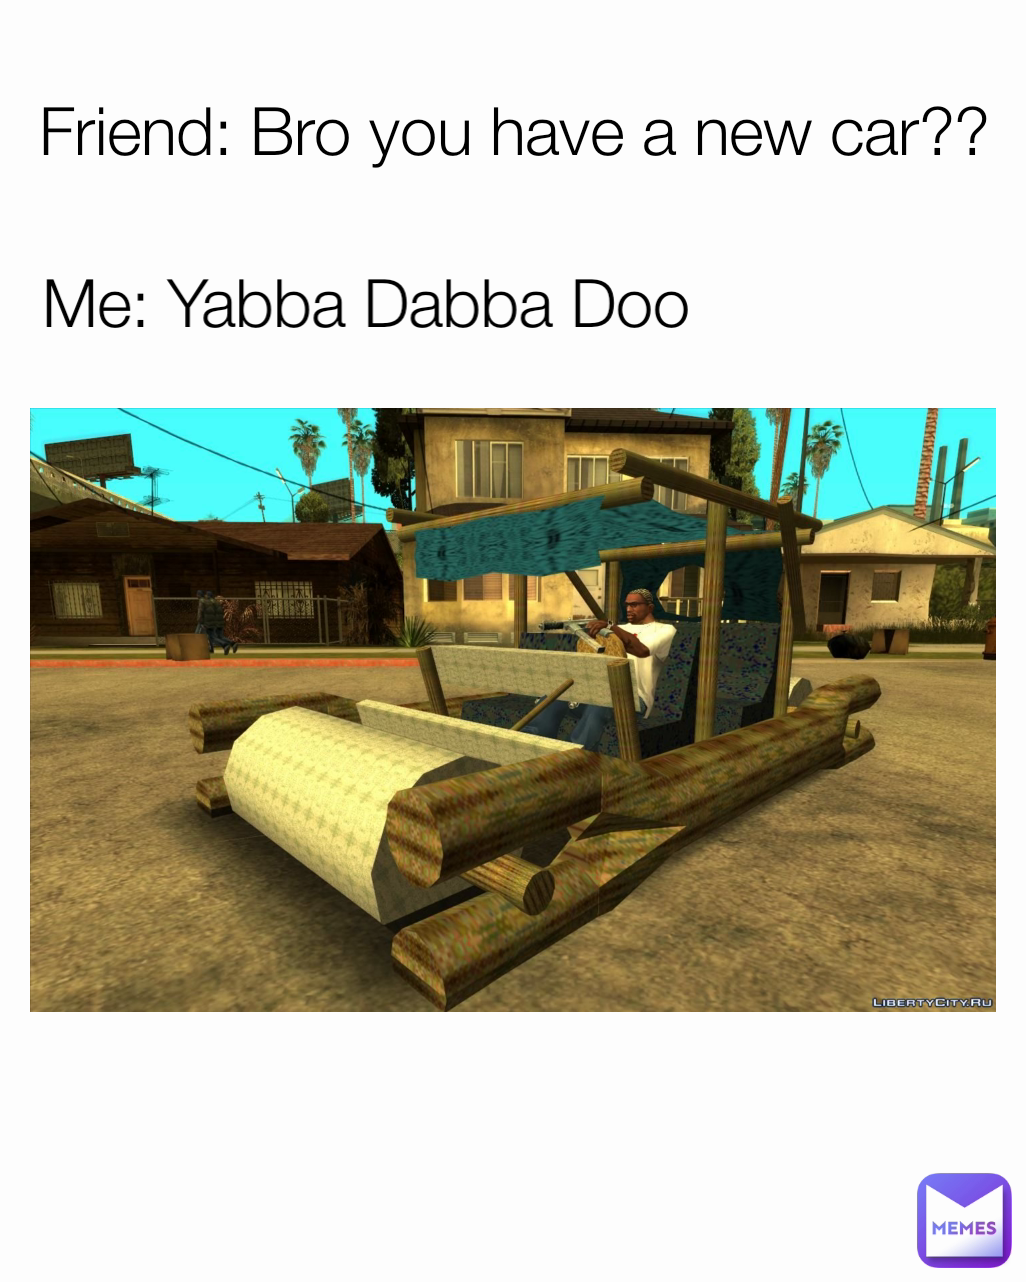 Me: Yabba Dabba Doo  Friend: Bro you have a new car??